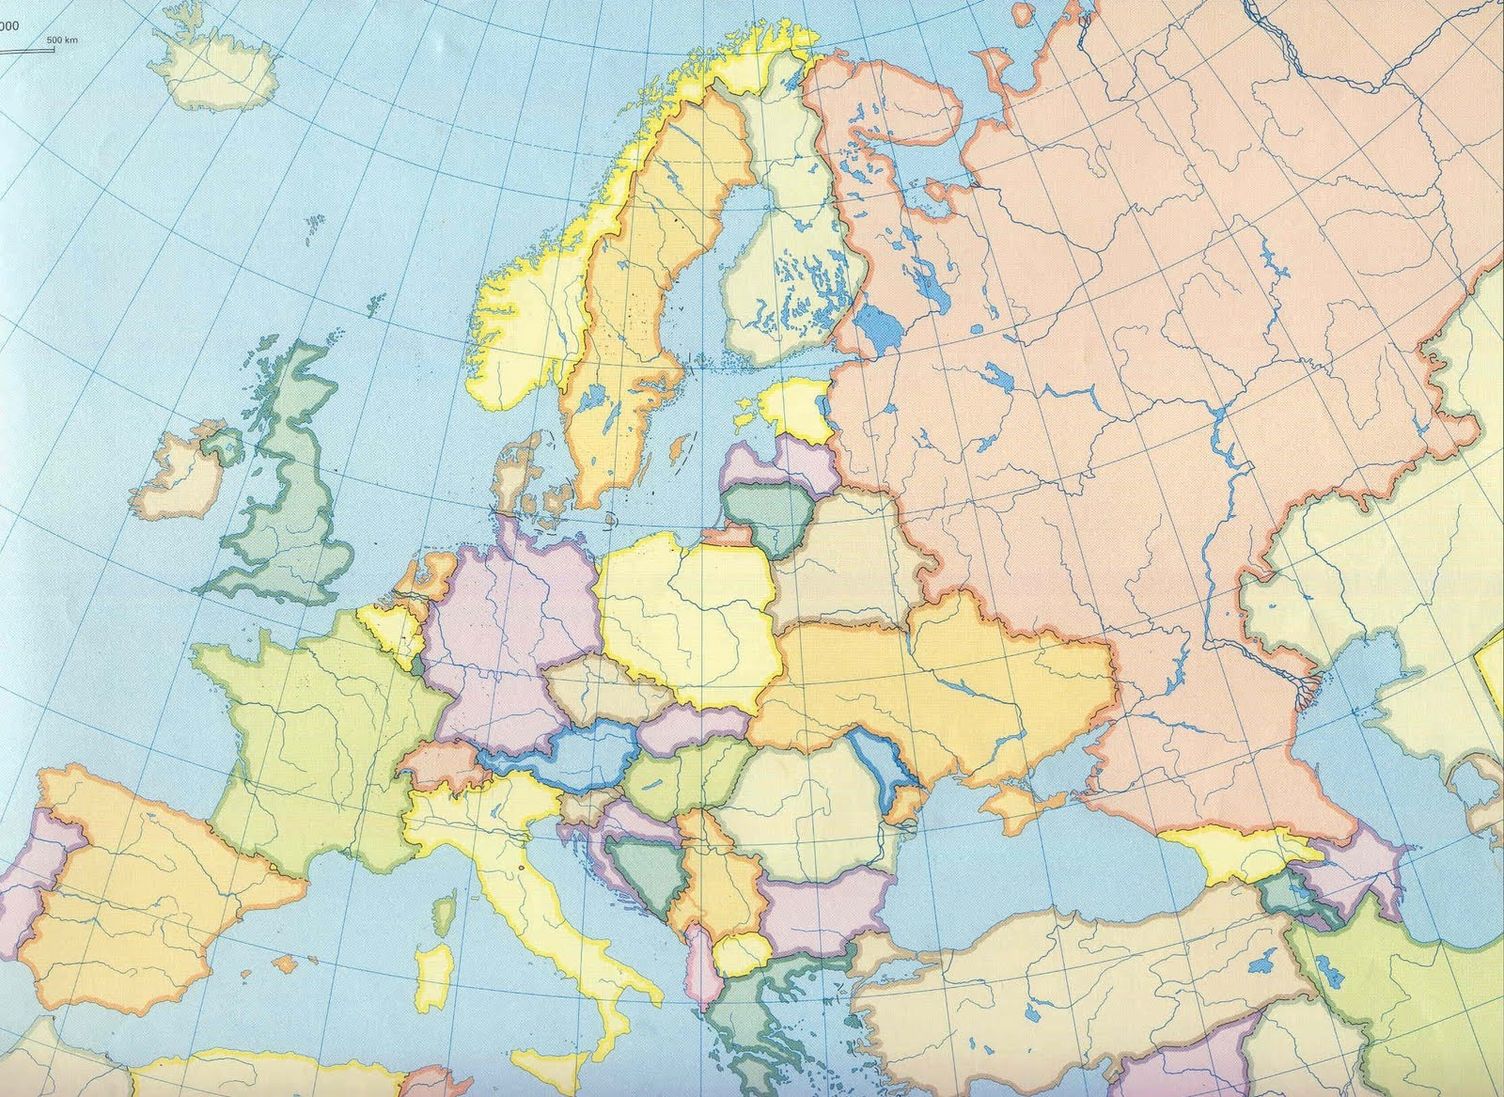 Западная европа политическая. Карта - Европа. Политическая карта Европы политическая карта Европы. Атлас Западной Европы. Карта Европы без названий стран.